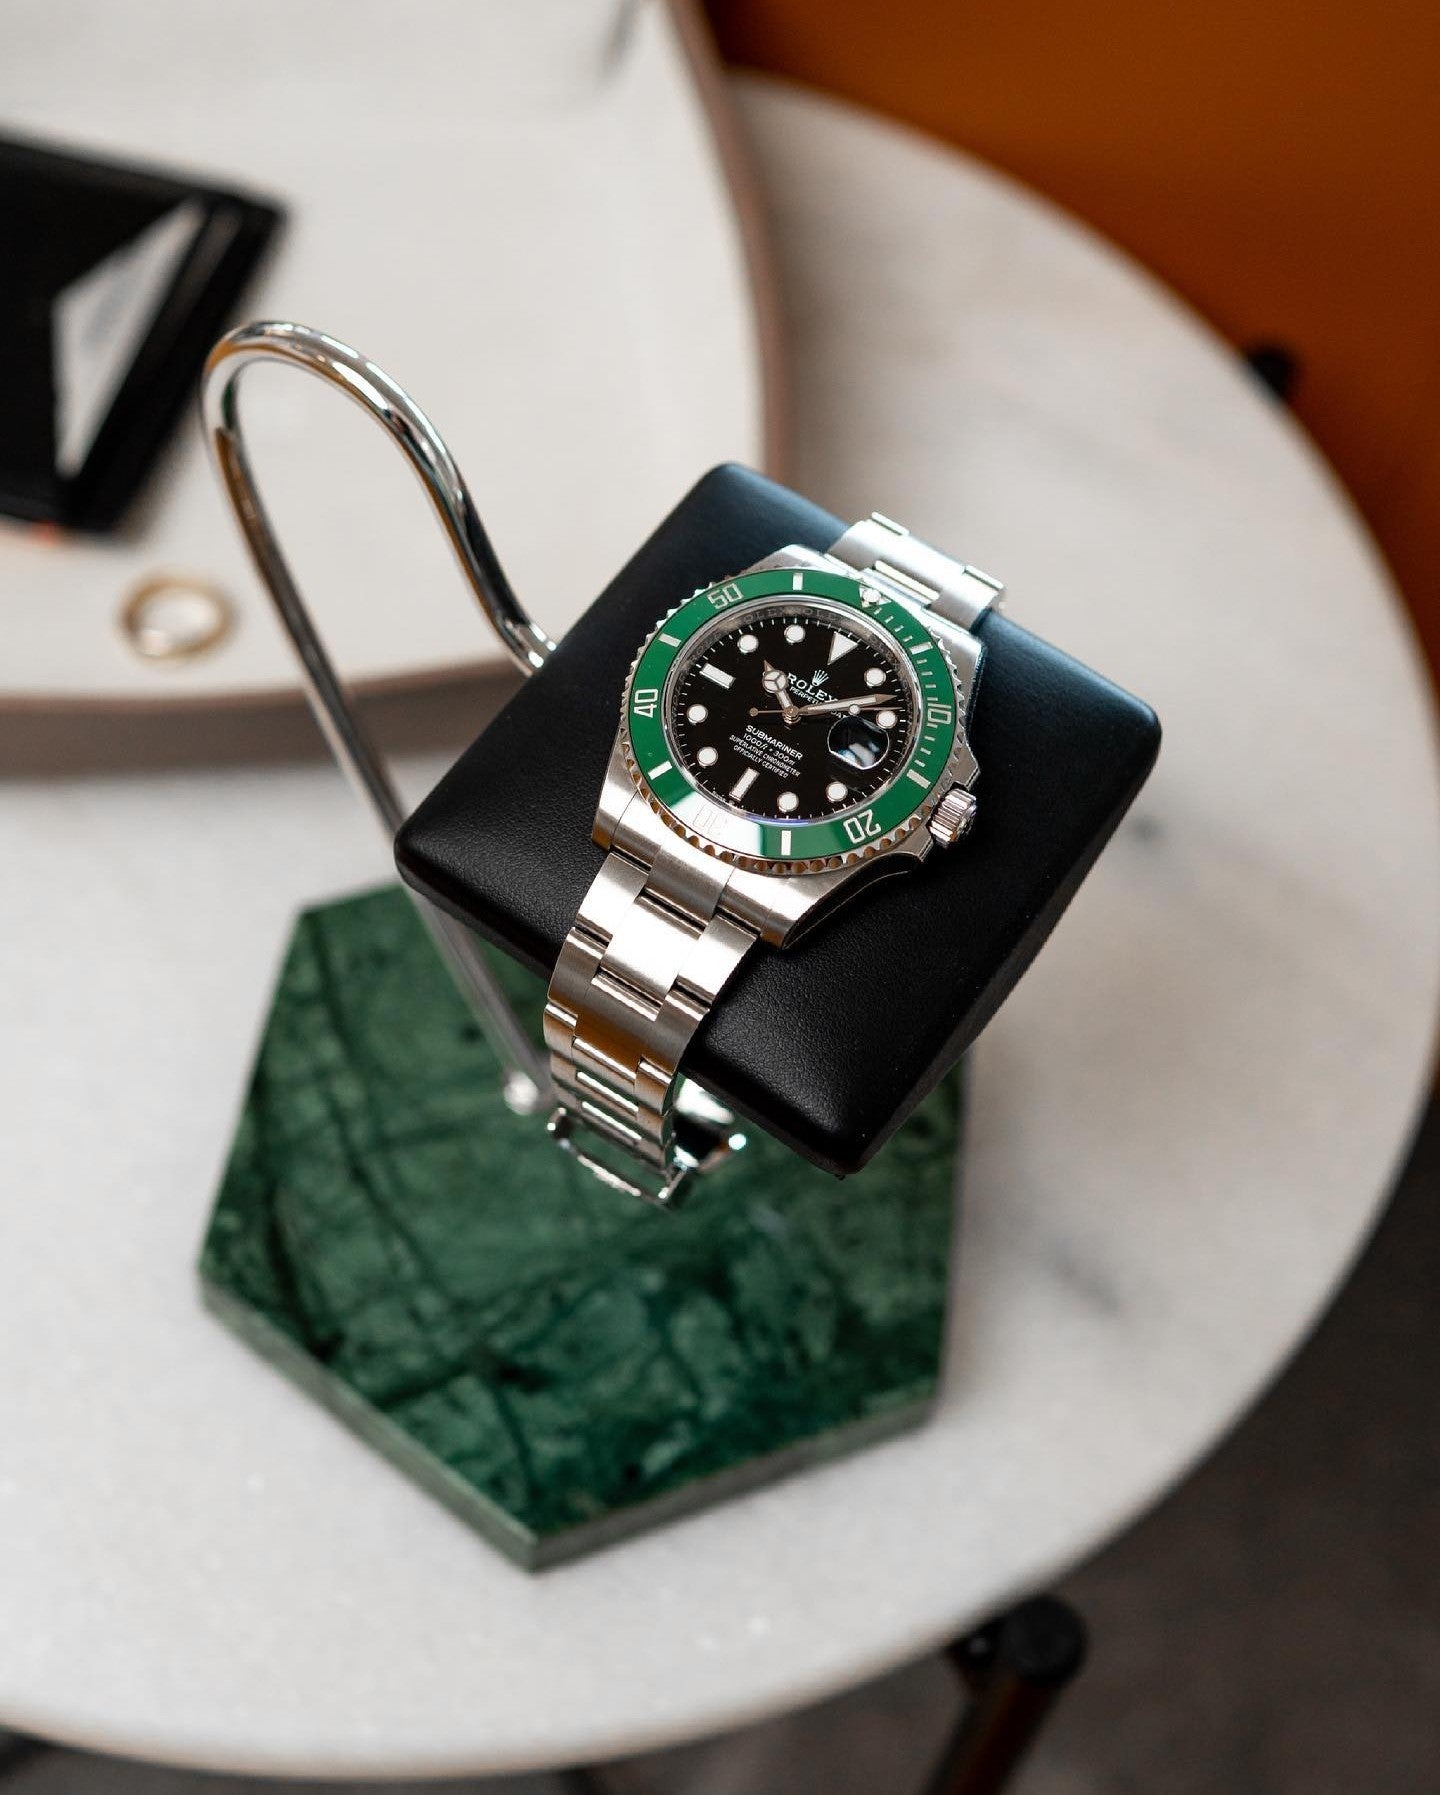 Hexagonal Luxury Watch Stand - Single Cushion - Green